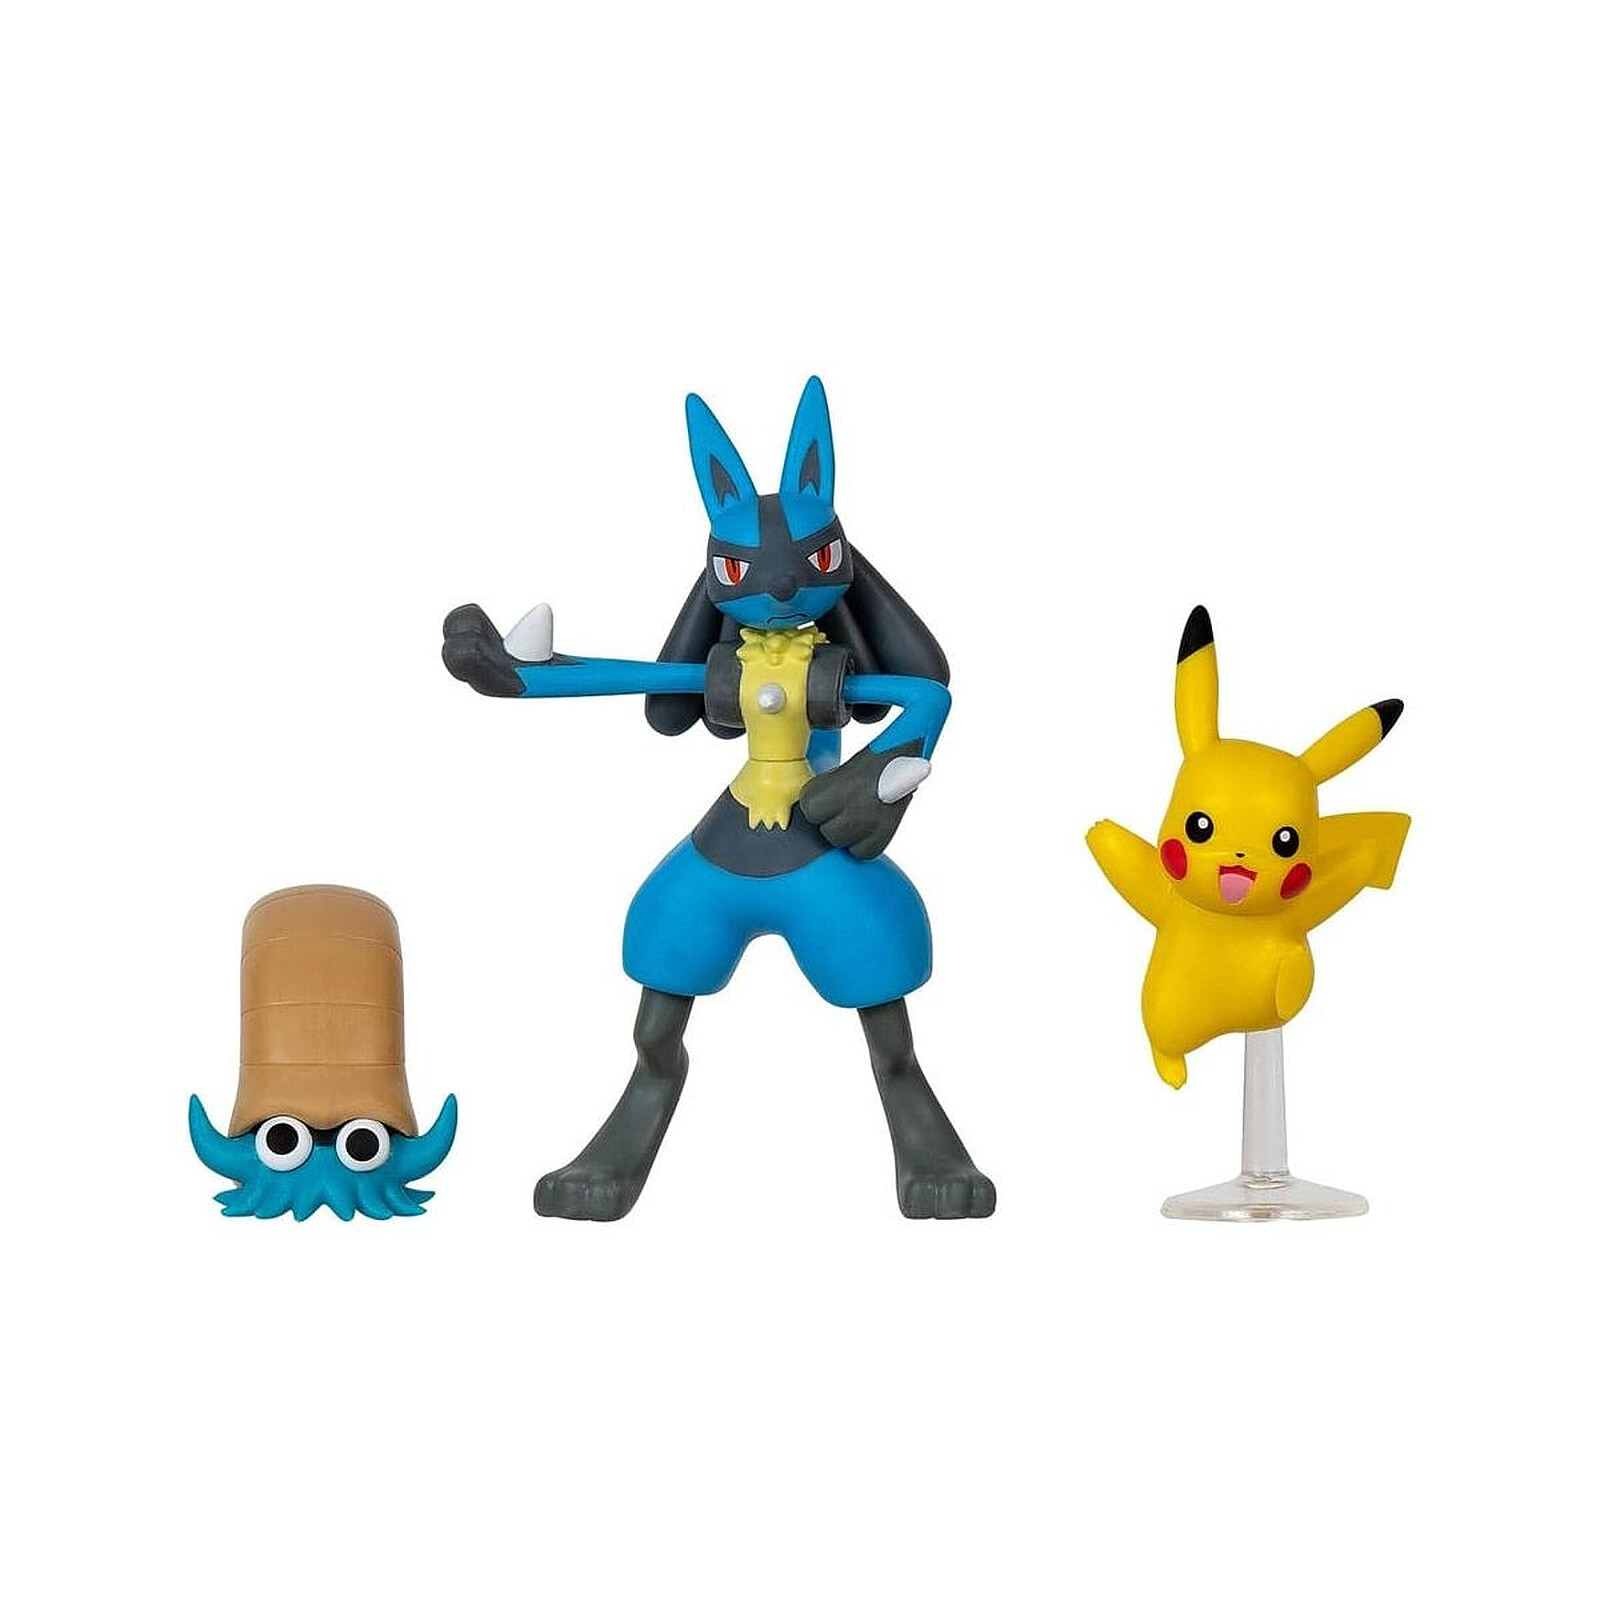 Pokémon - Figurines Battle Feature Ash & Pikachu 11 cm - Figurines - LDLC